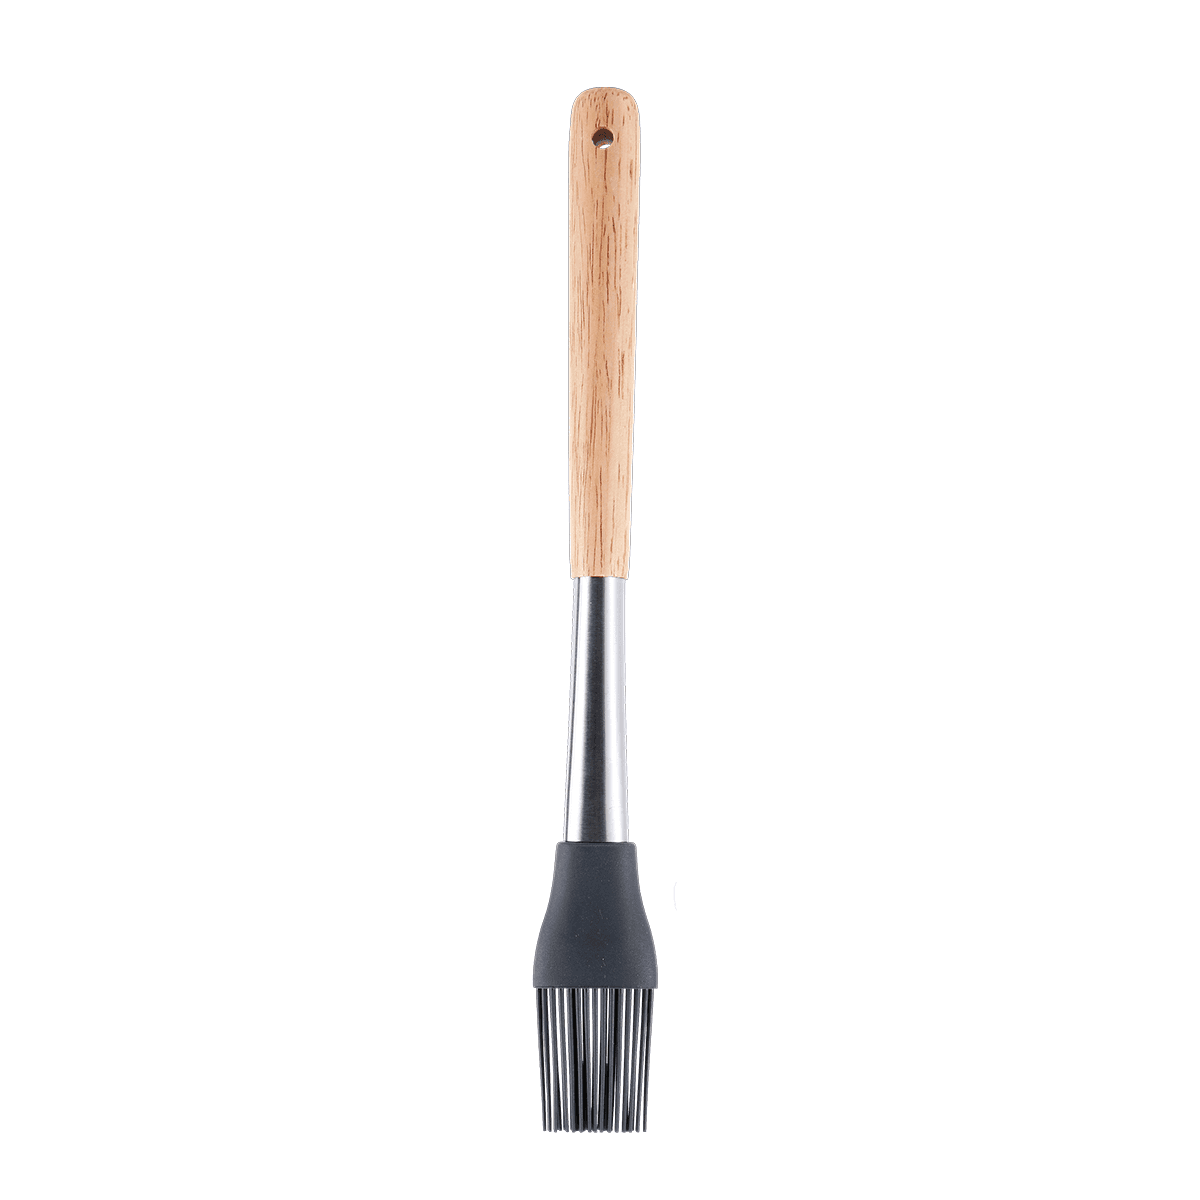 فرشاة الزيت سيليكون 31 سم مع مقبض خشبي ڤاج Vague Silicone Grey Silicone Oil Brush with Oak Wood Handle